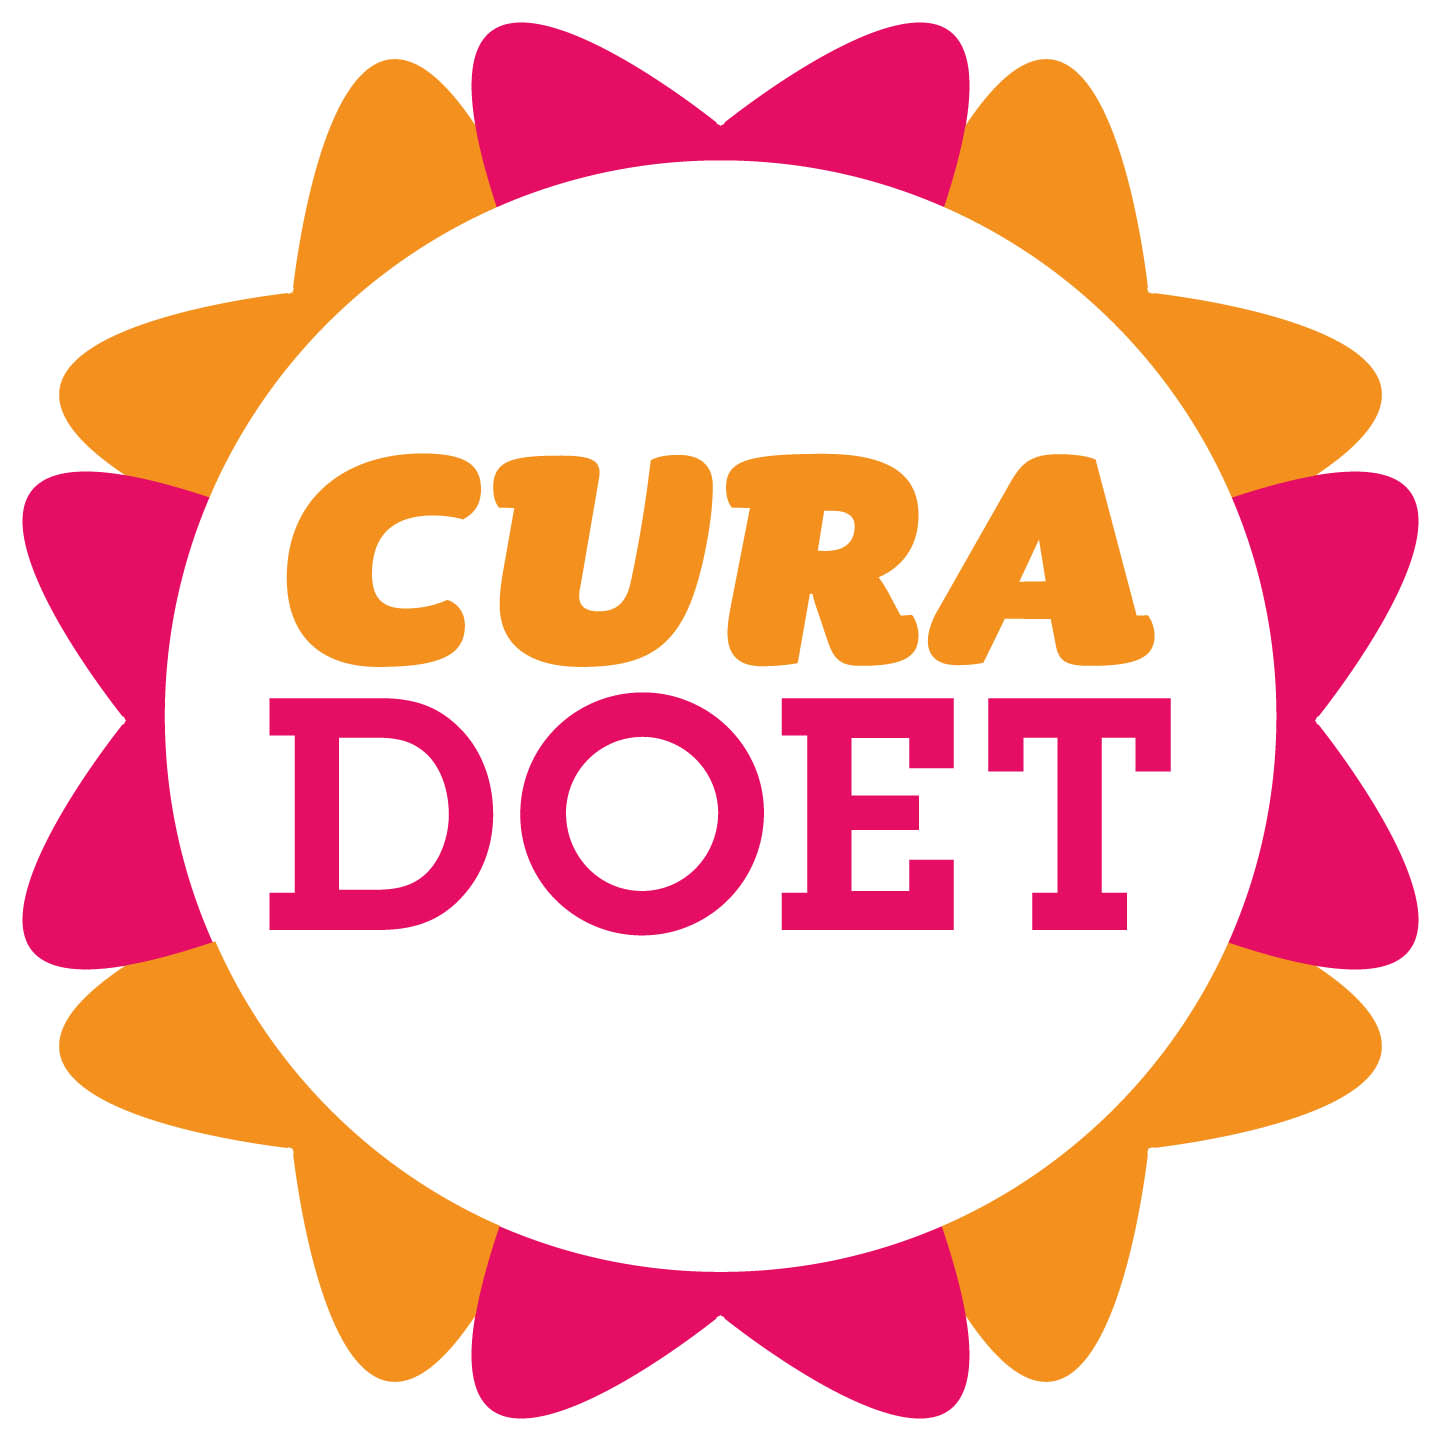 Deadline pa inskripshon di proyekto pa CURA DOET dia 23 di desèmber 2016